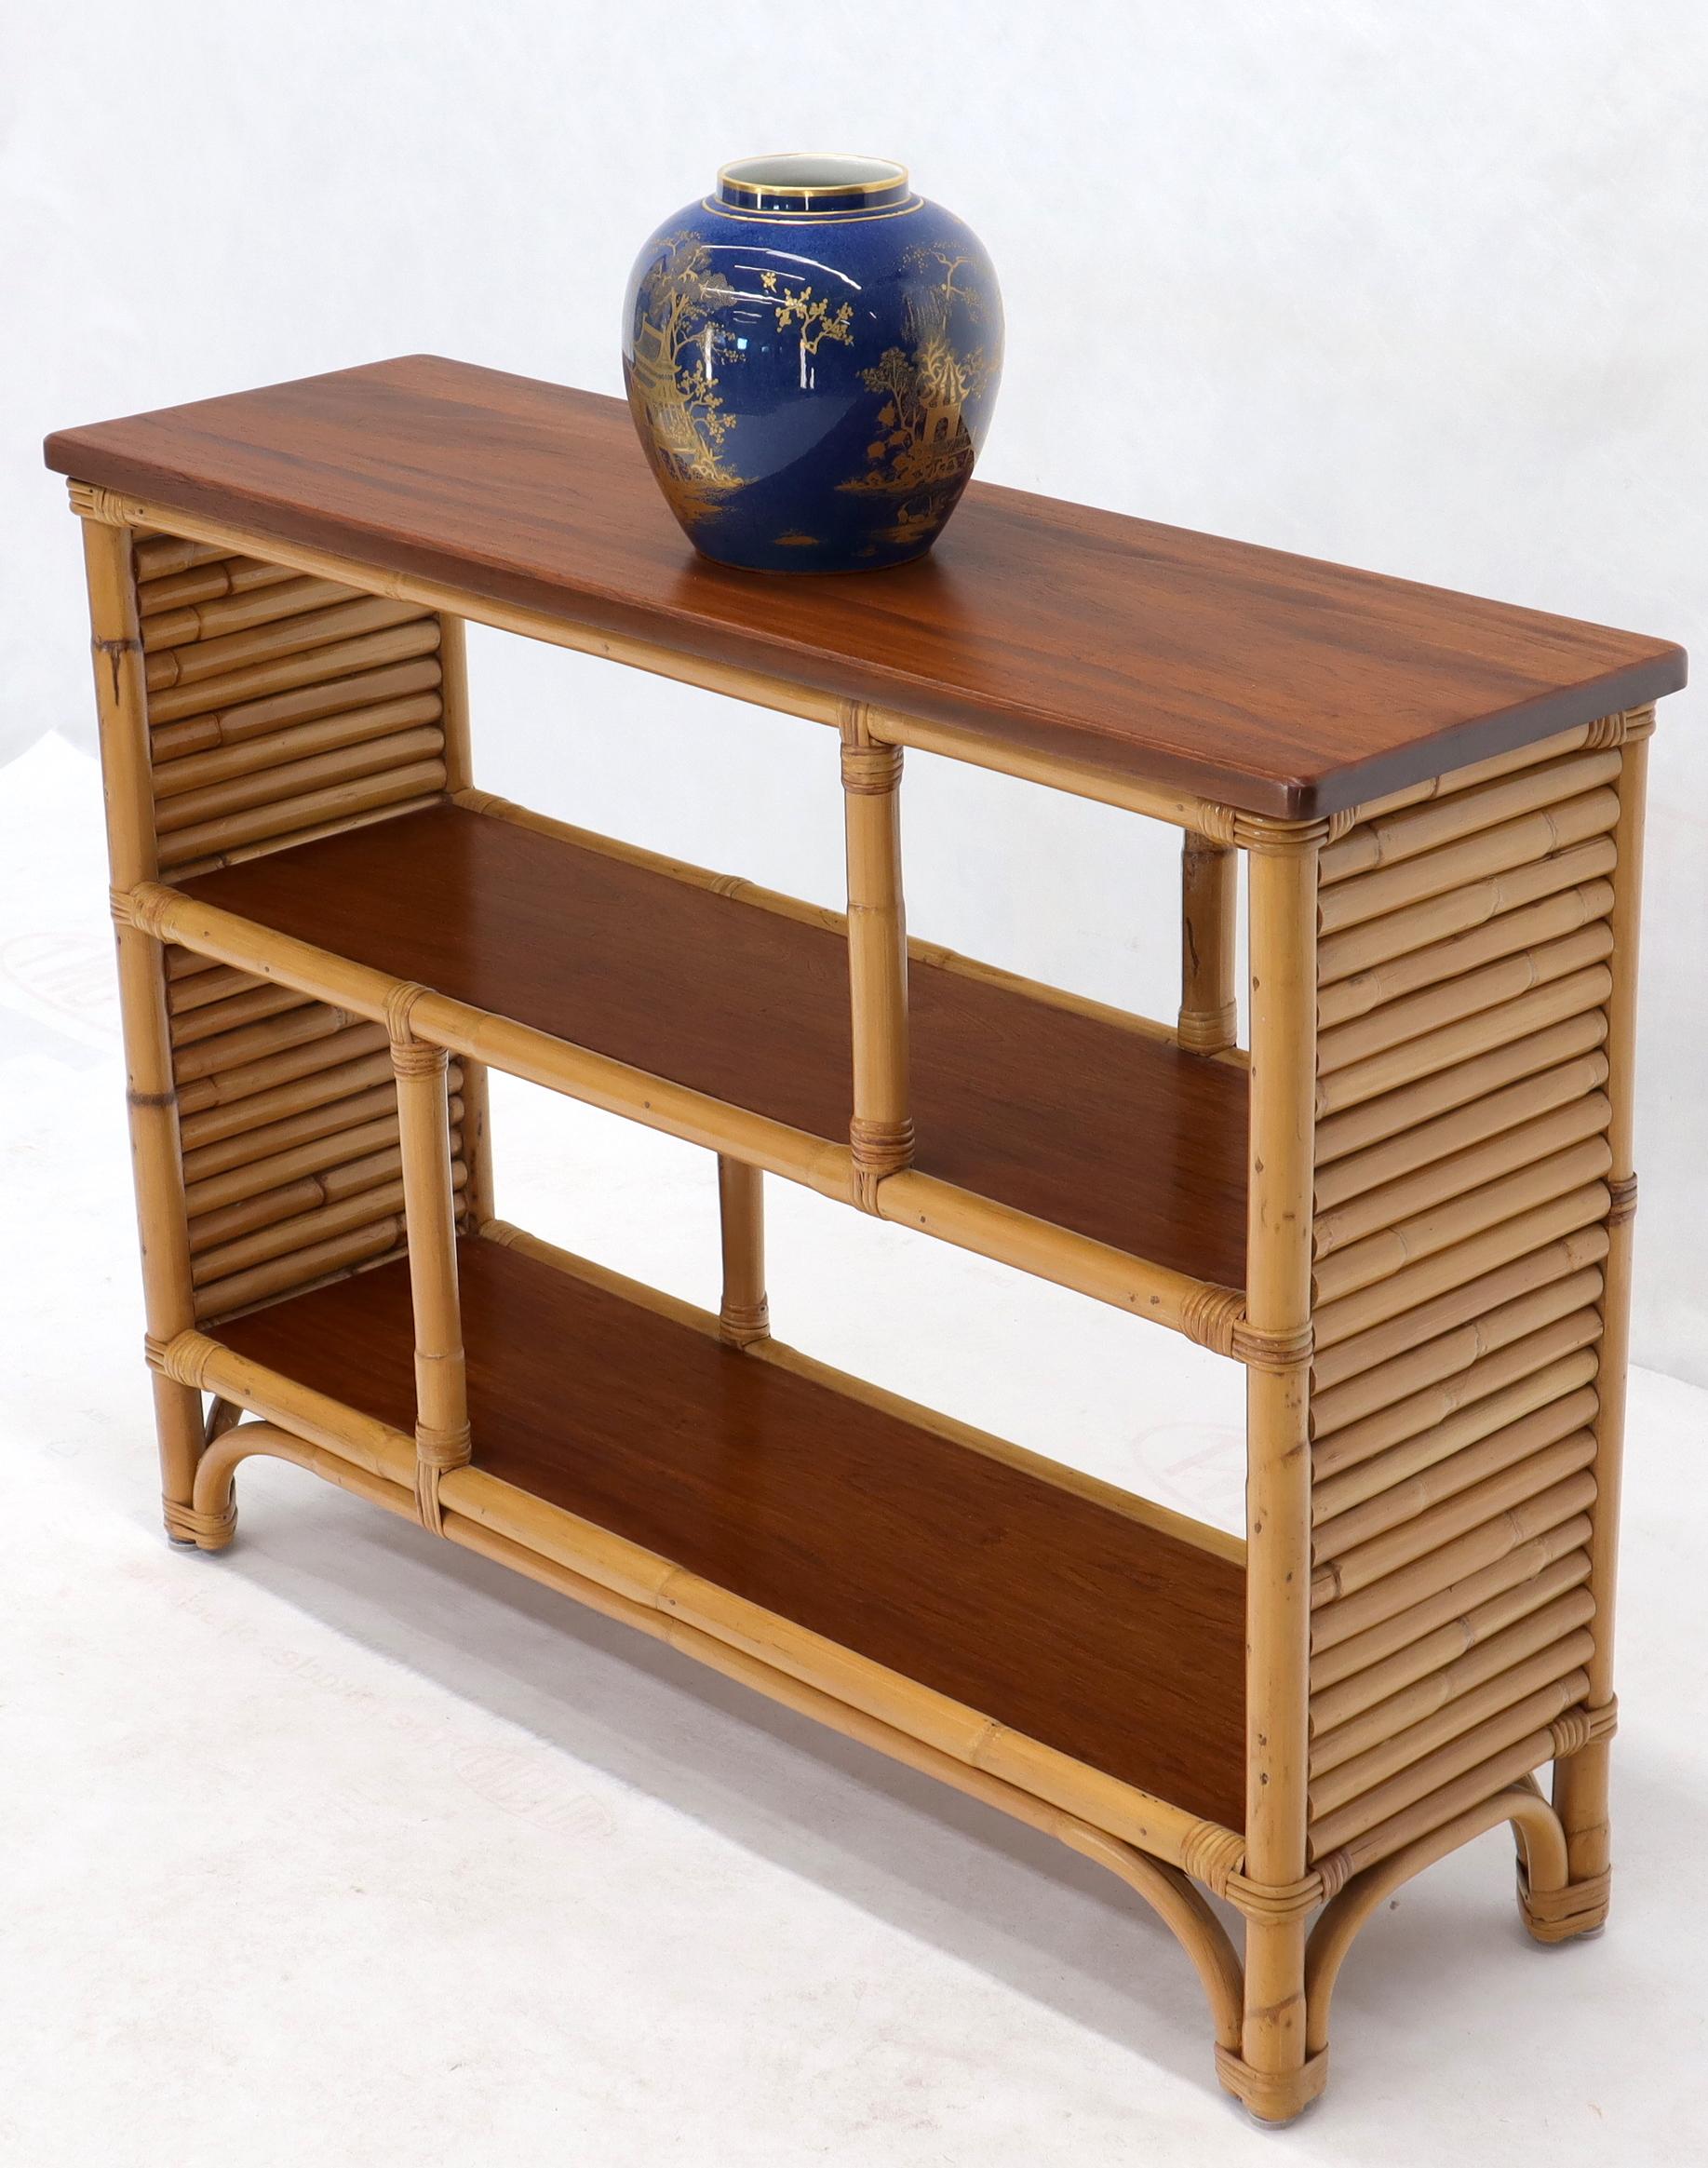 Rattan and Walnut Mid-Century Modern Console Table Shelf Bookcase 1